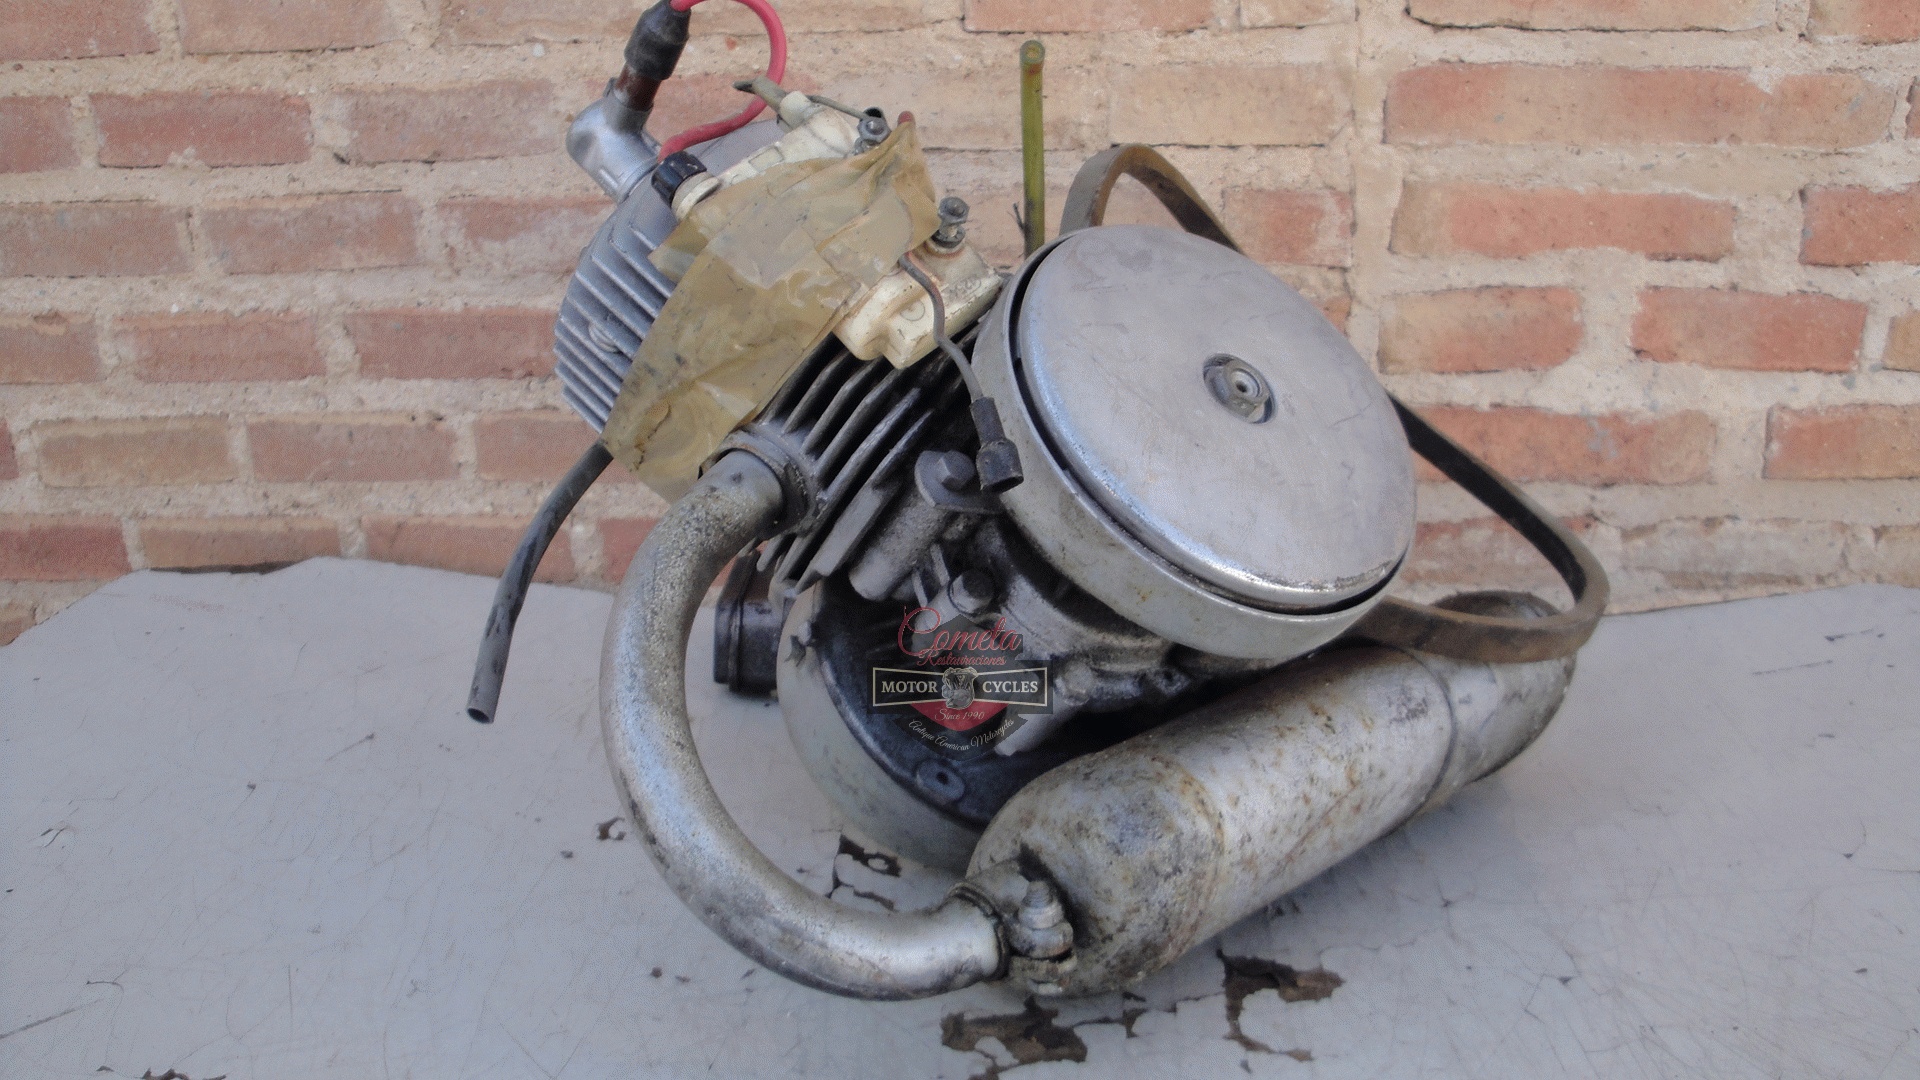 MOTOR MOTOBECANE / MOBYLETTE / GAC EIBAR  AV88 50cc AÑOS 70 